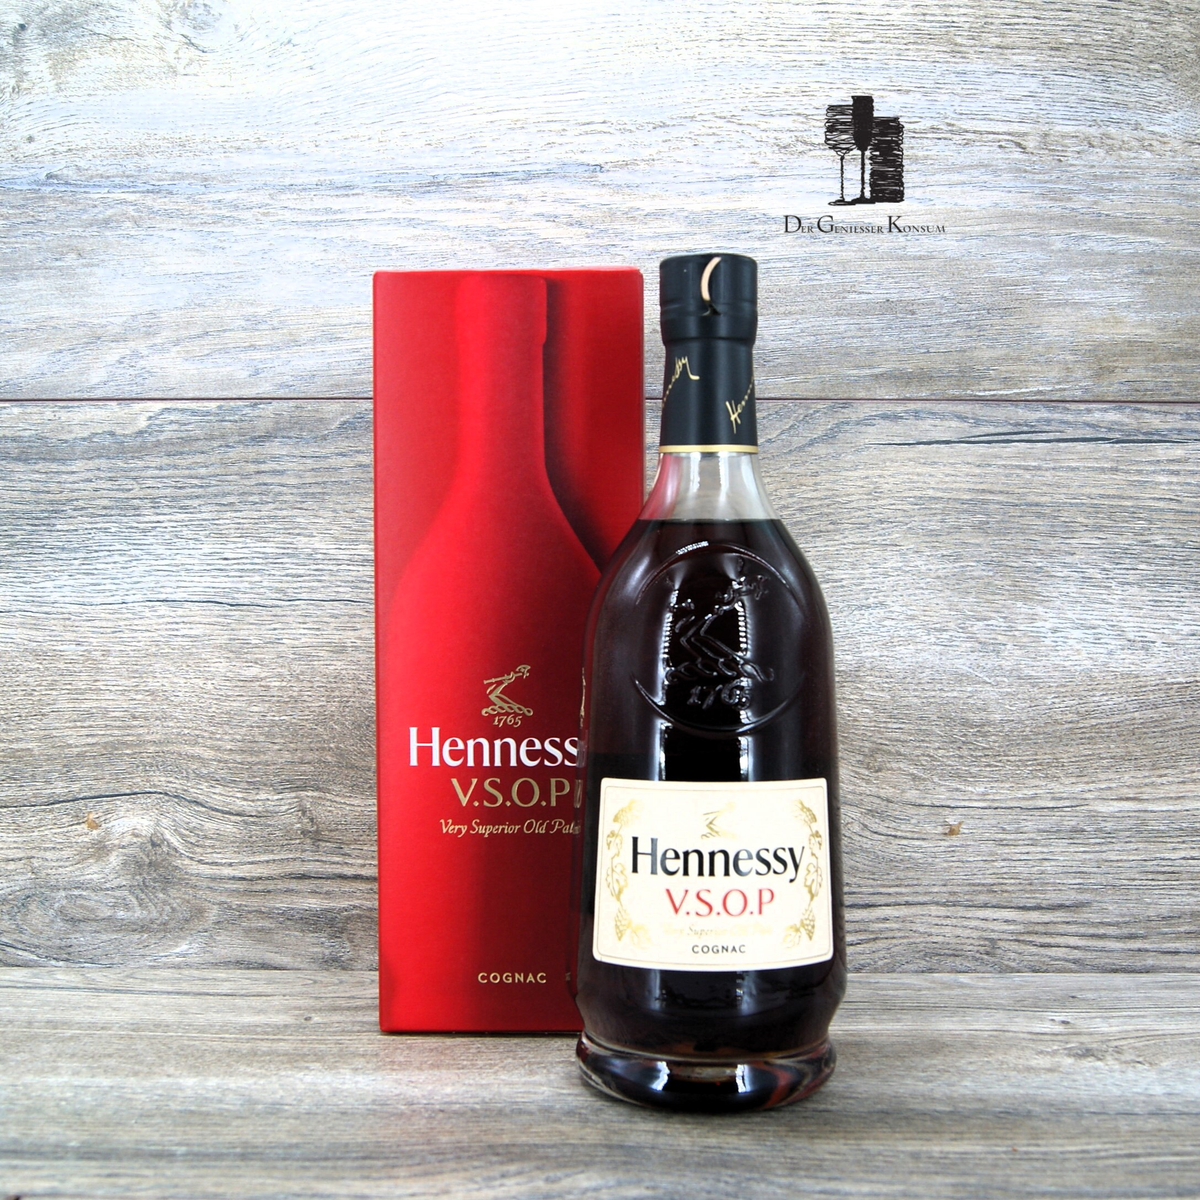 40% Cognac 0,7l, VSOP, Der Hennessy Geniesser Konsum –